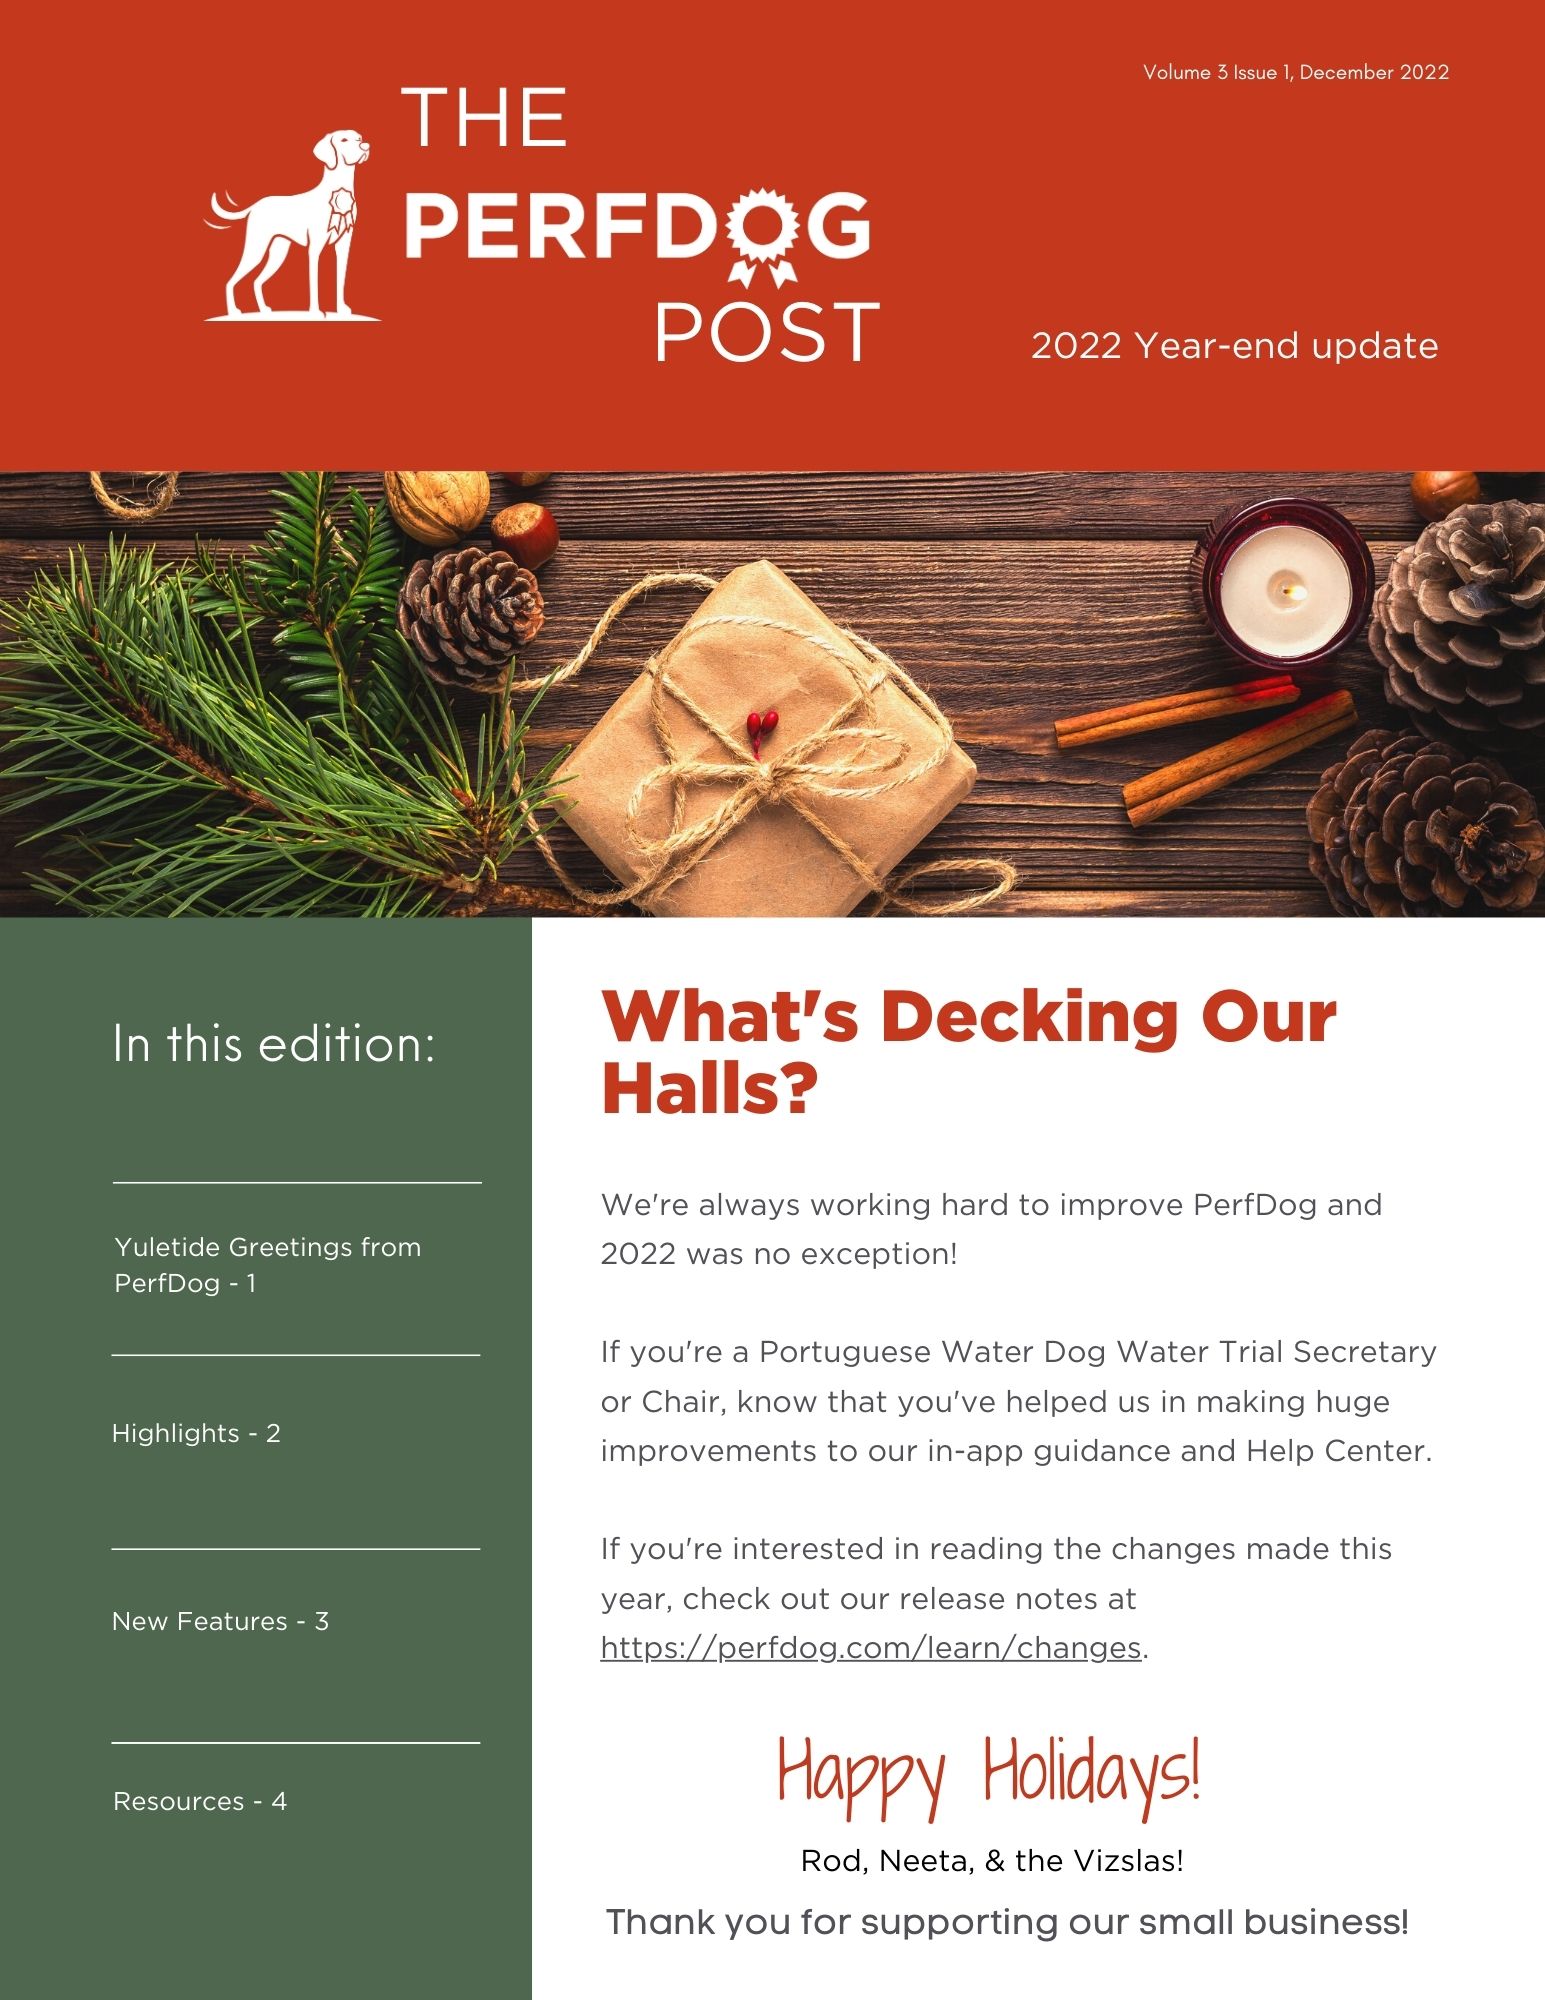 THE PERFDOG POST - Dec 2022 Newsletter